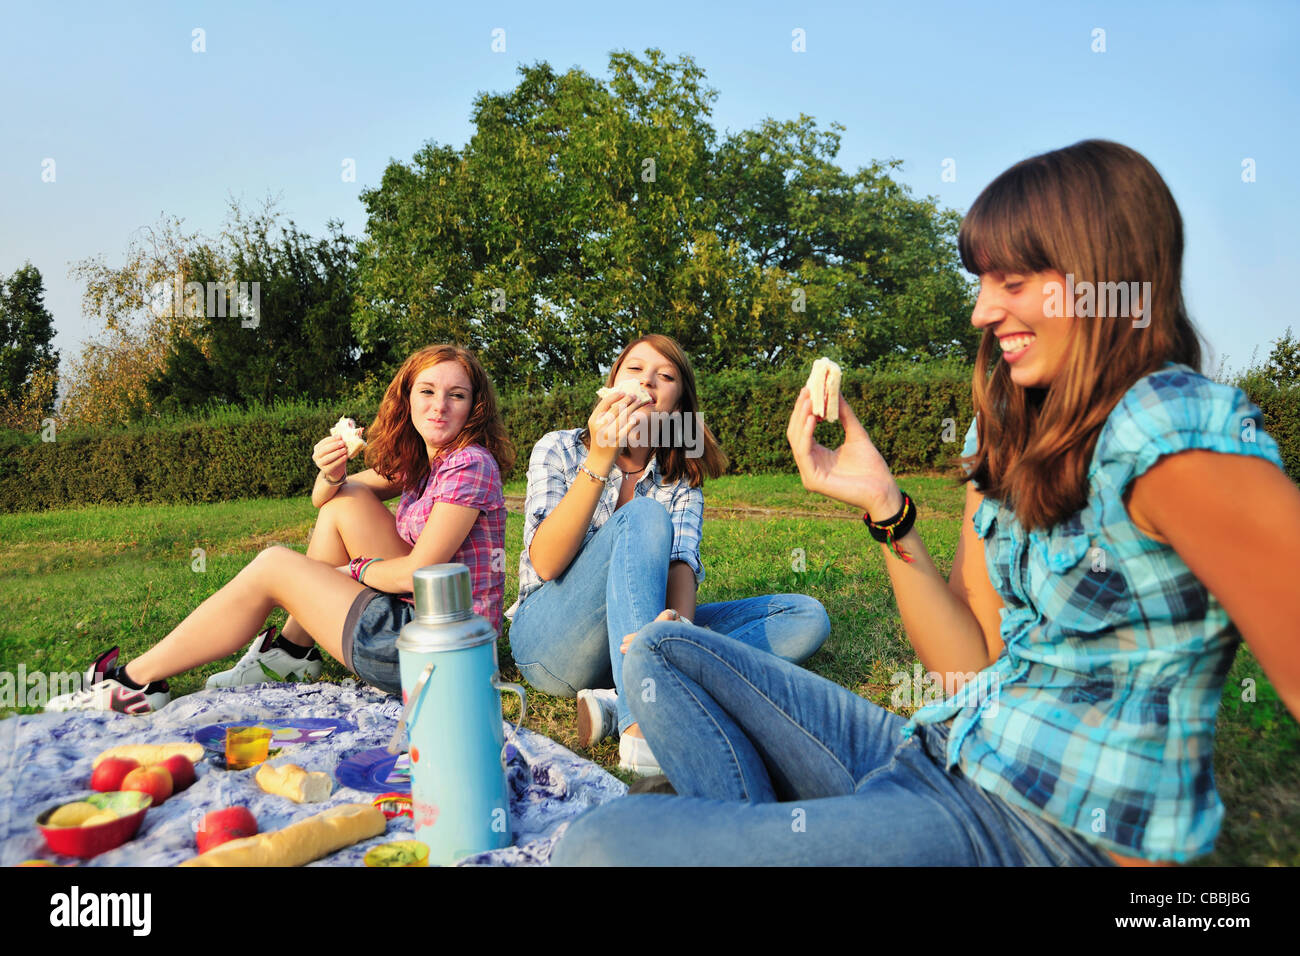 Teenage girls picnicking in rural field Stock Photo